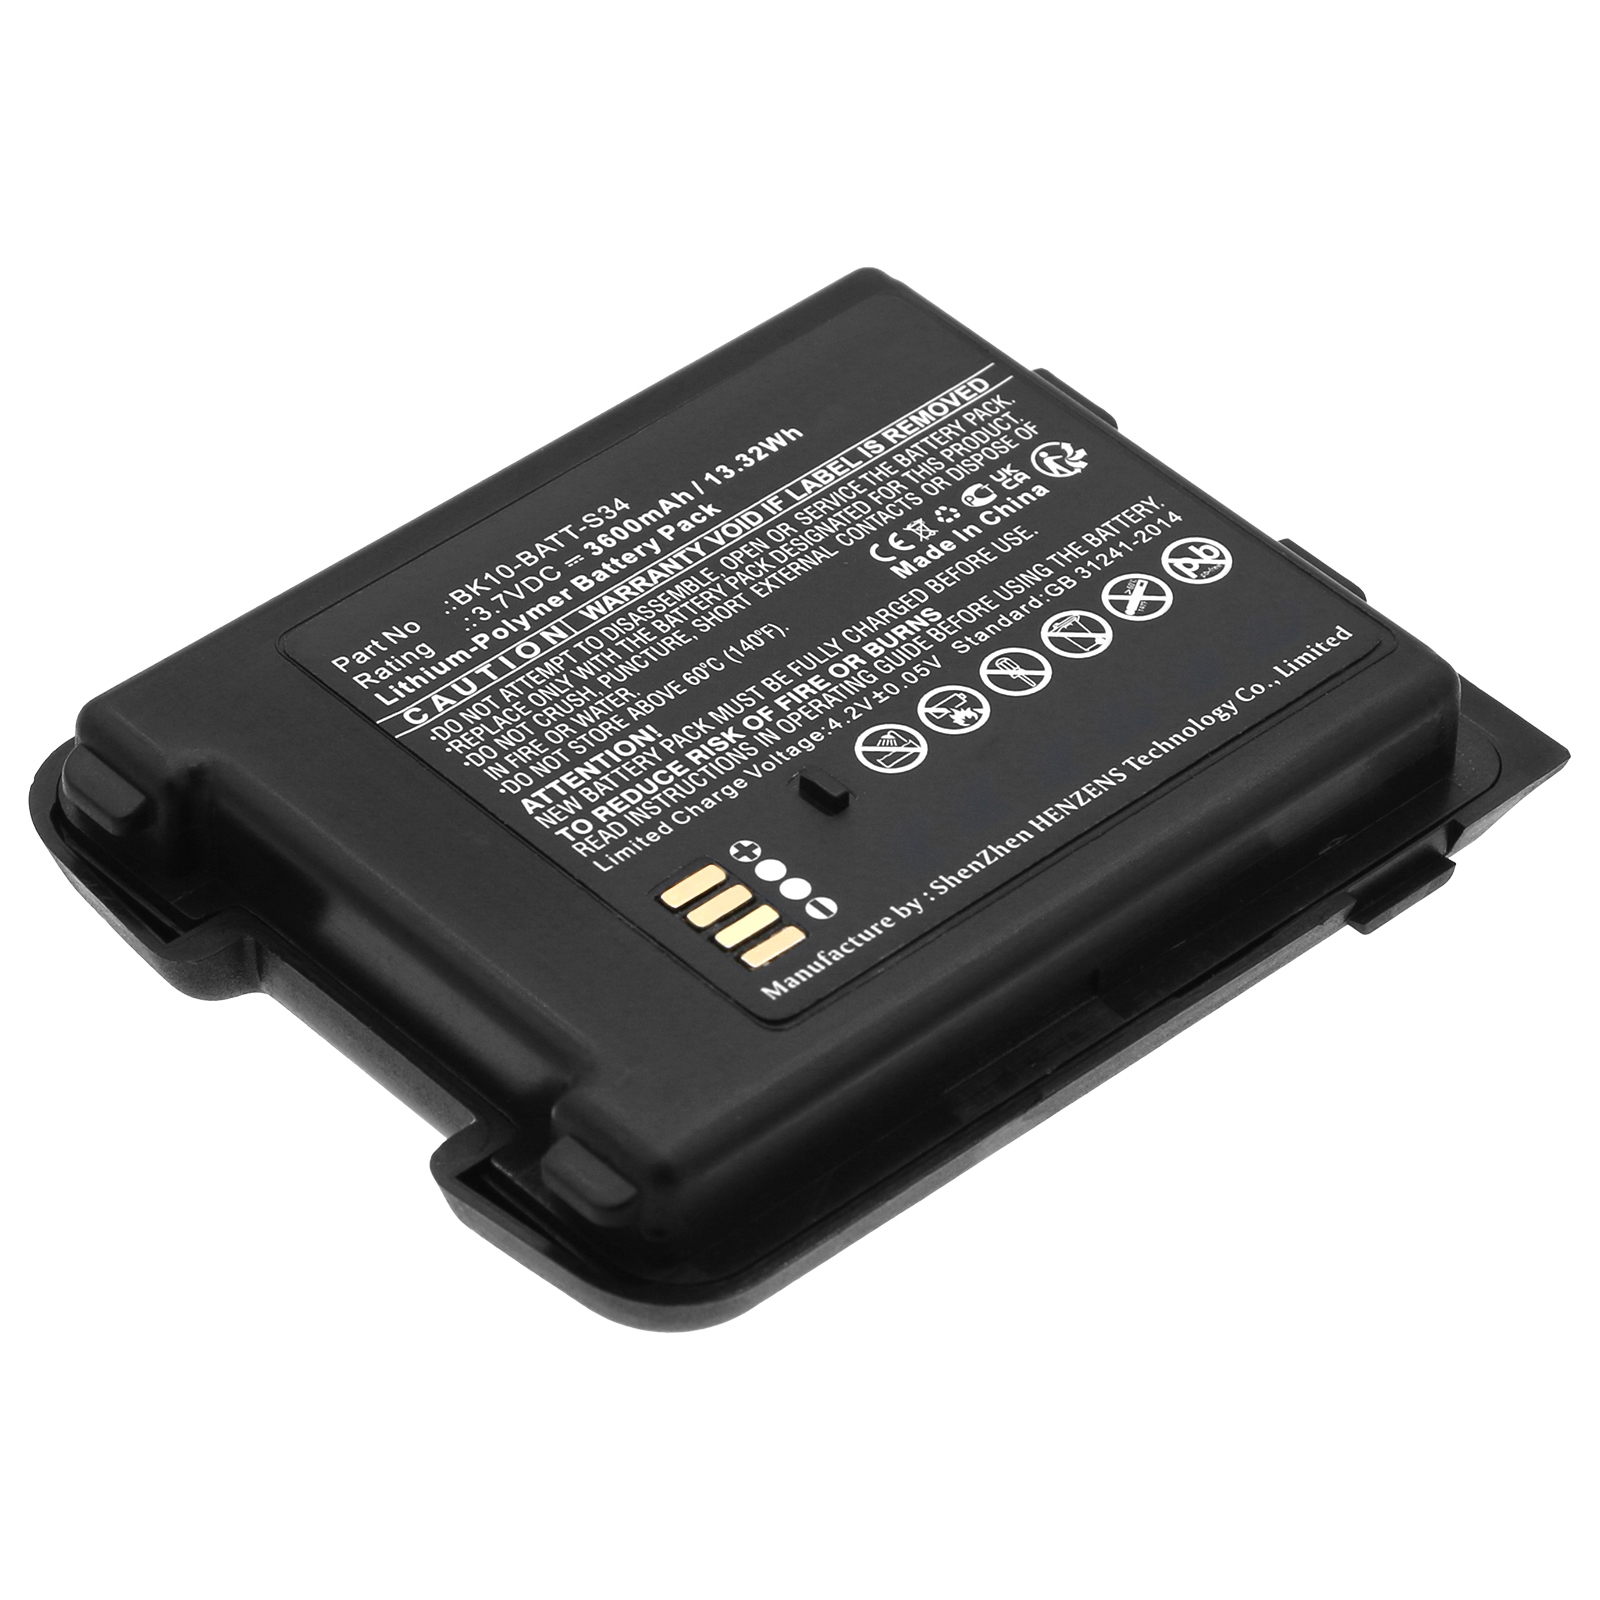 Synergy Digital Barcode Scanner Battery, Compatible with M3 Mobile BK10-BATT-S34 Barcode Scanner Battery (Li-Pol, 3.7V, 3600mAh)